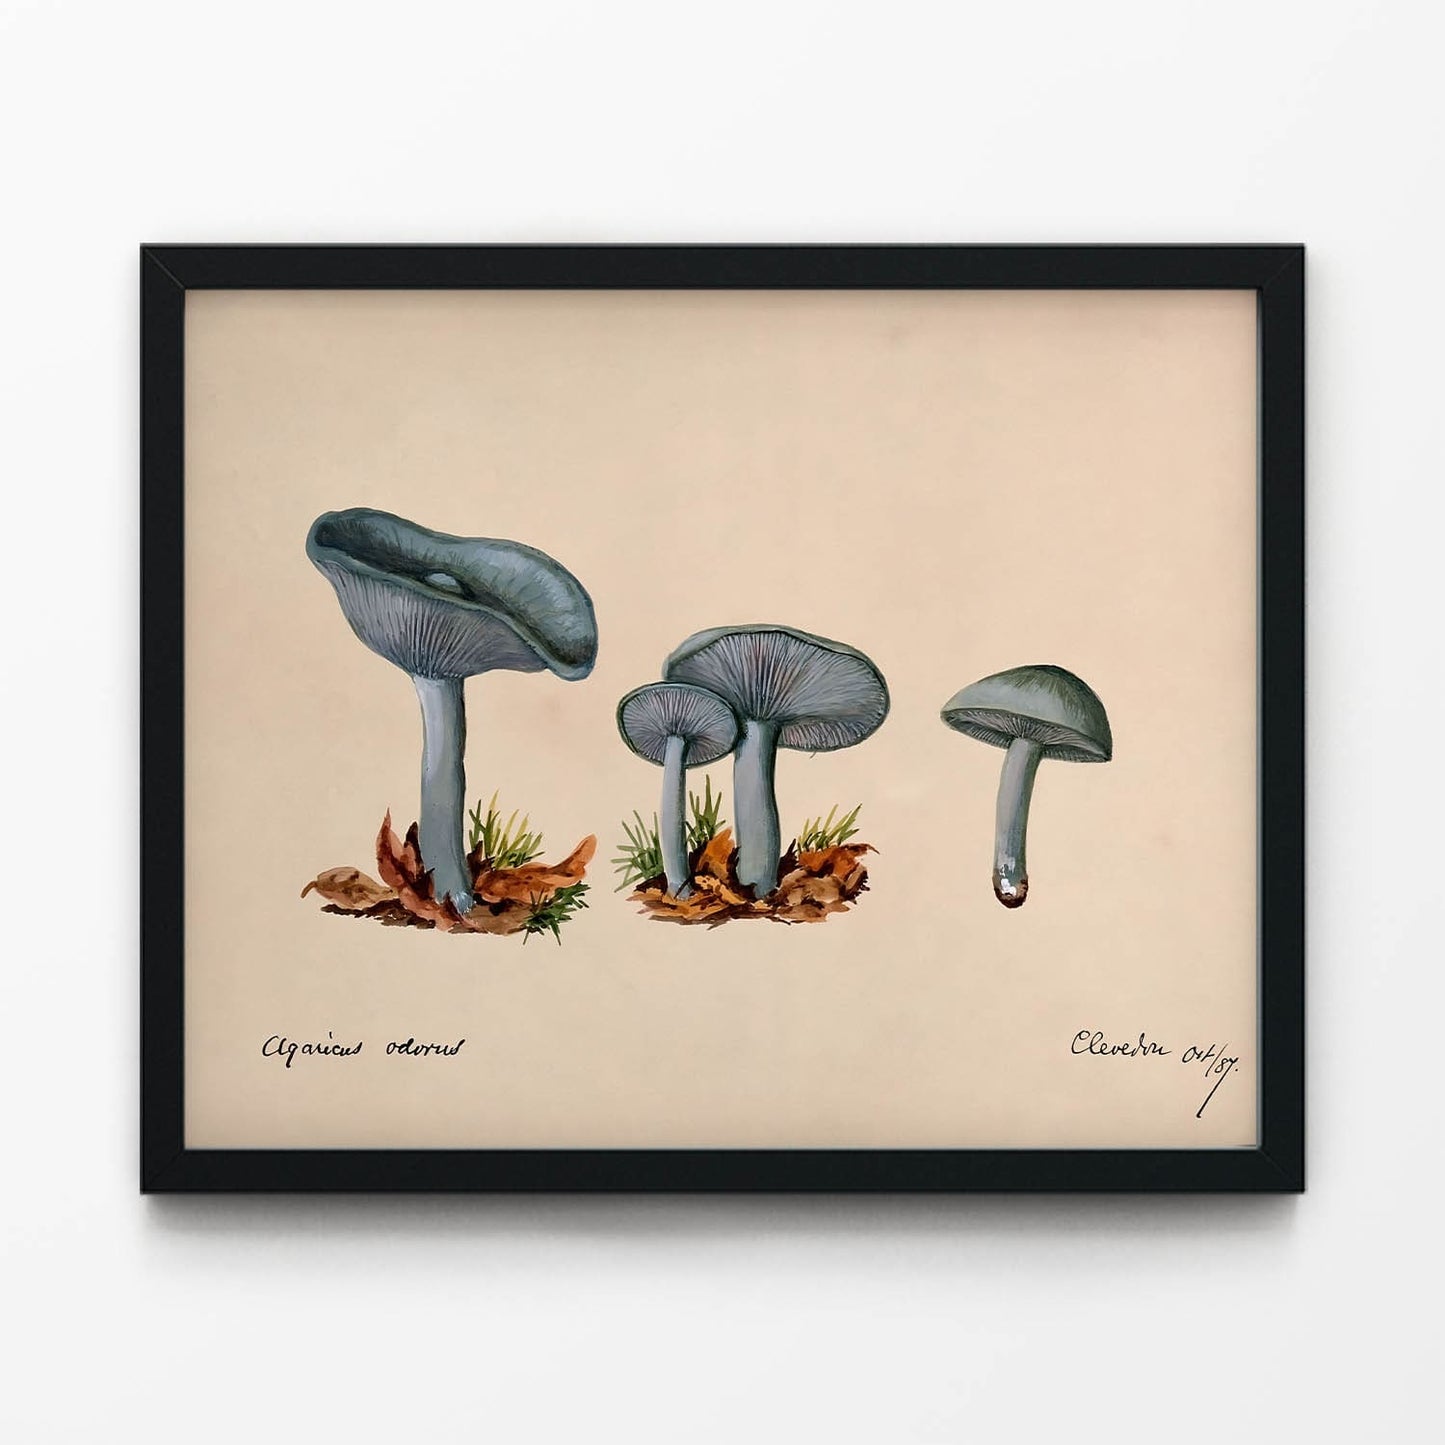 Little Blue Mushrooms Art Print in Black Picture Frame